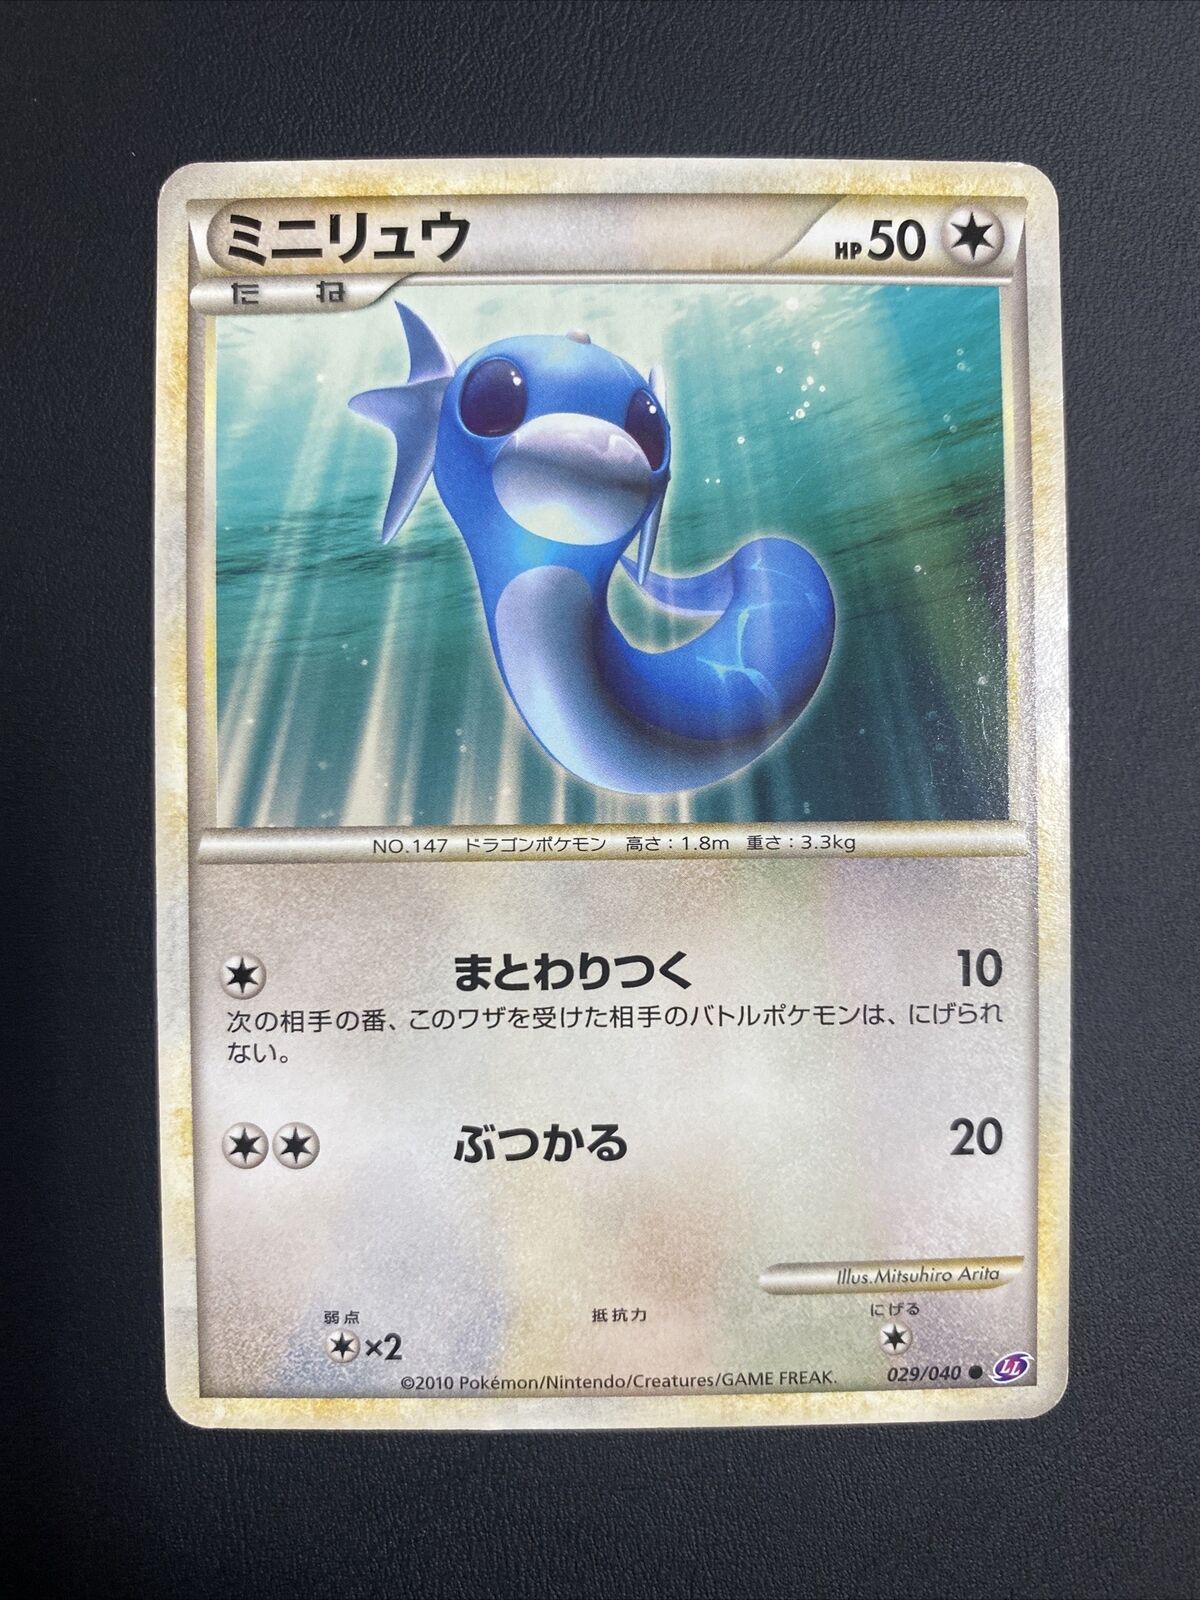 #1970 Dratini 029/040 Lost Link 2010 Japanese Pokemon Card TCG